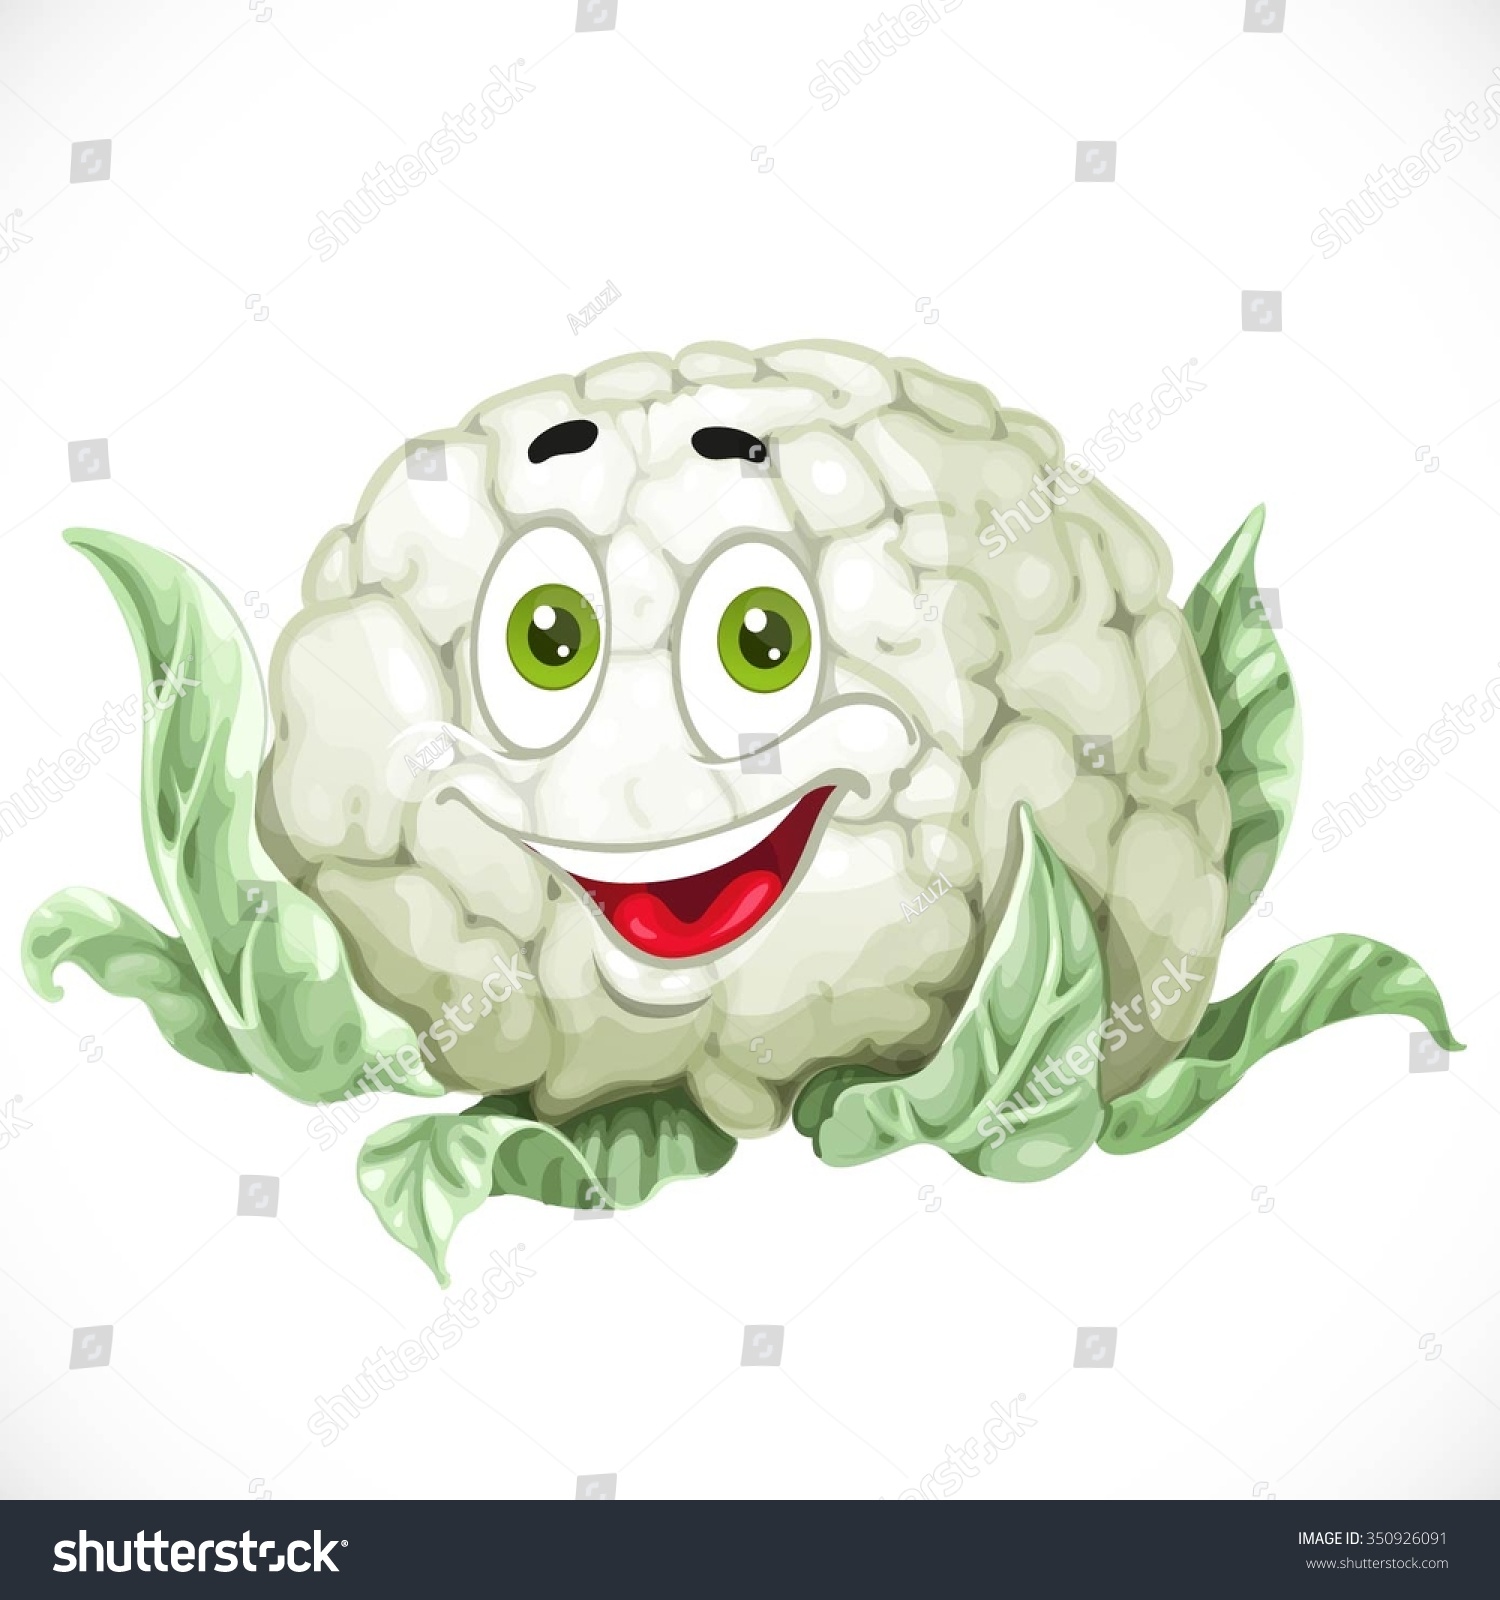 Cartoon Smiling Cauliflower Isolated On White Stock Vector 350926091